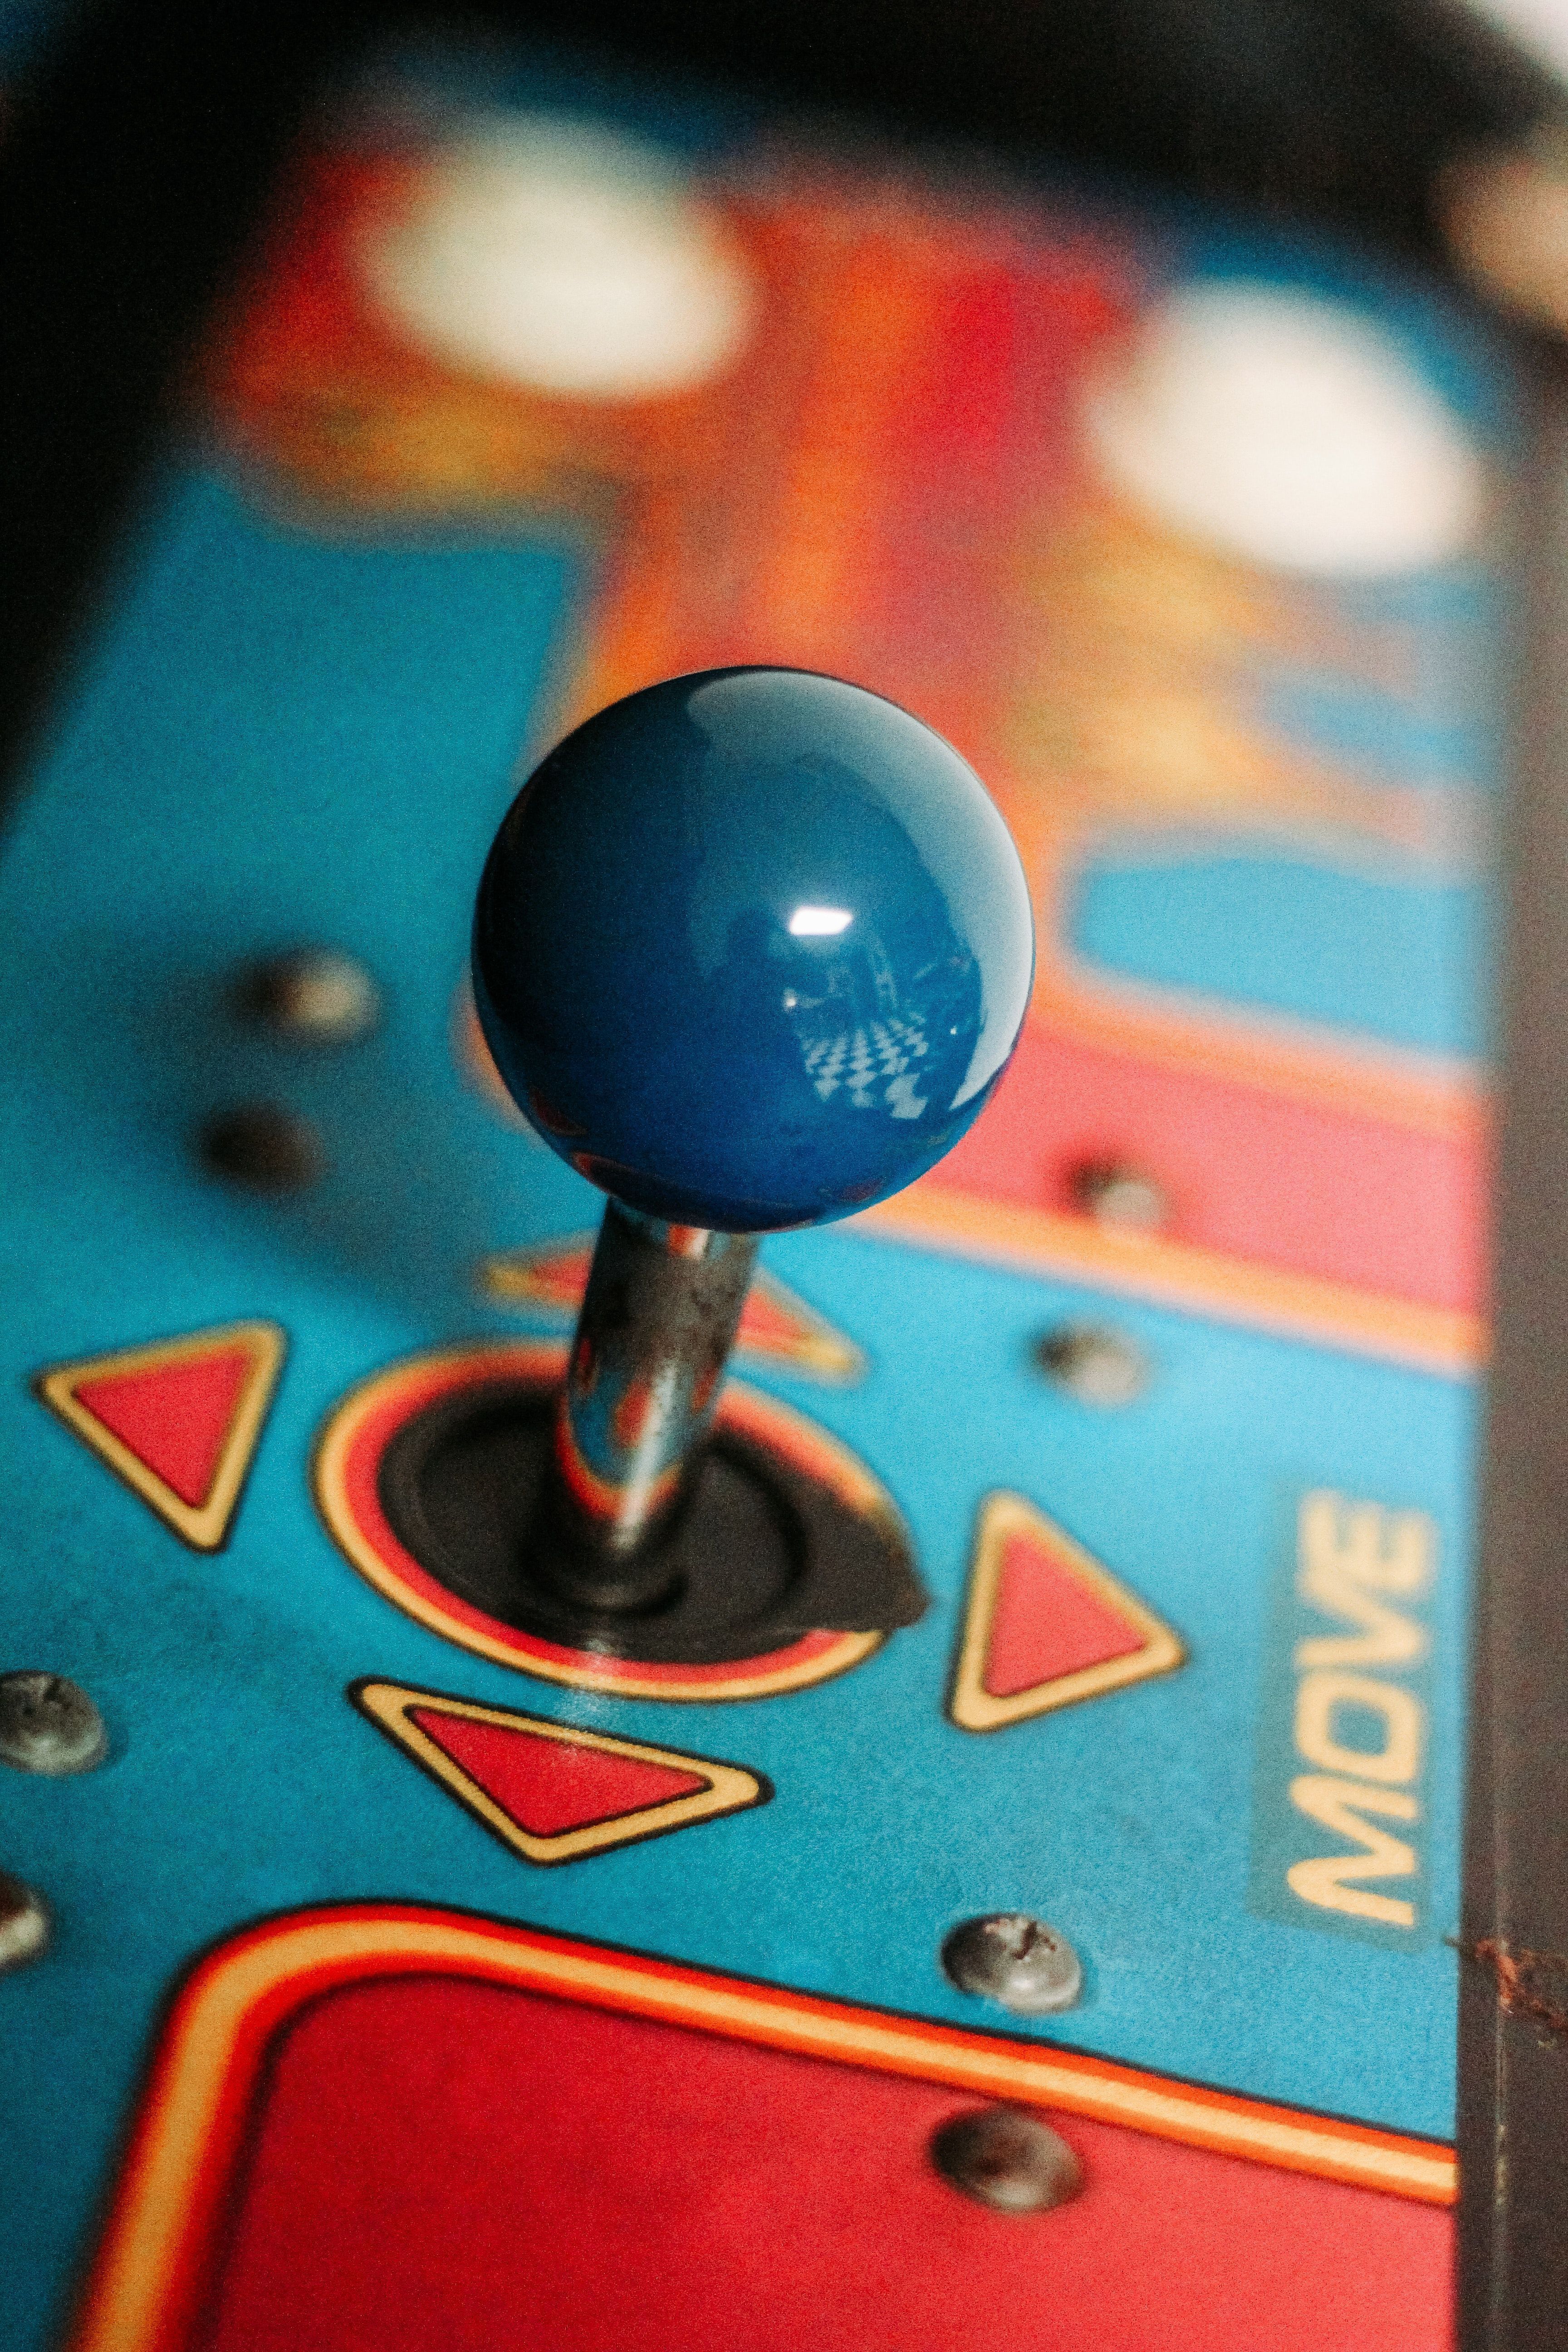 Blue Arcade Joystick · Free